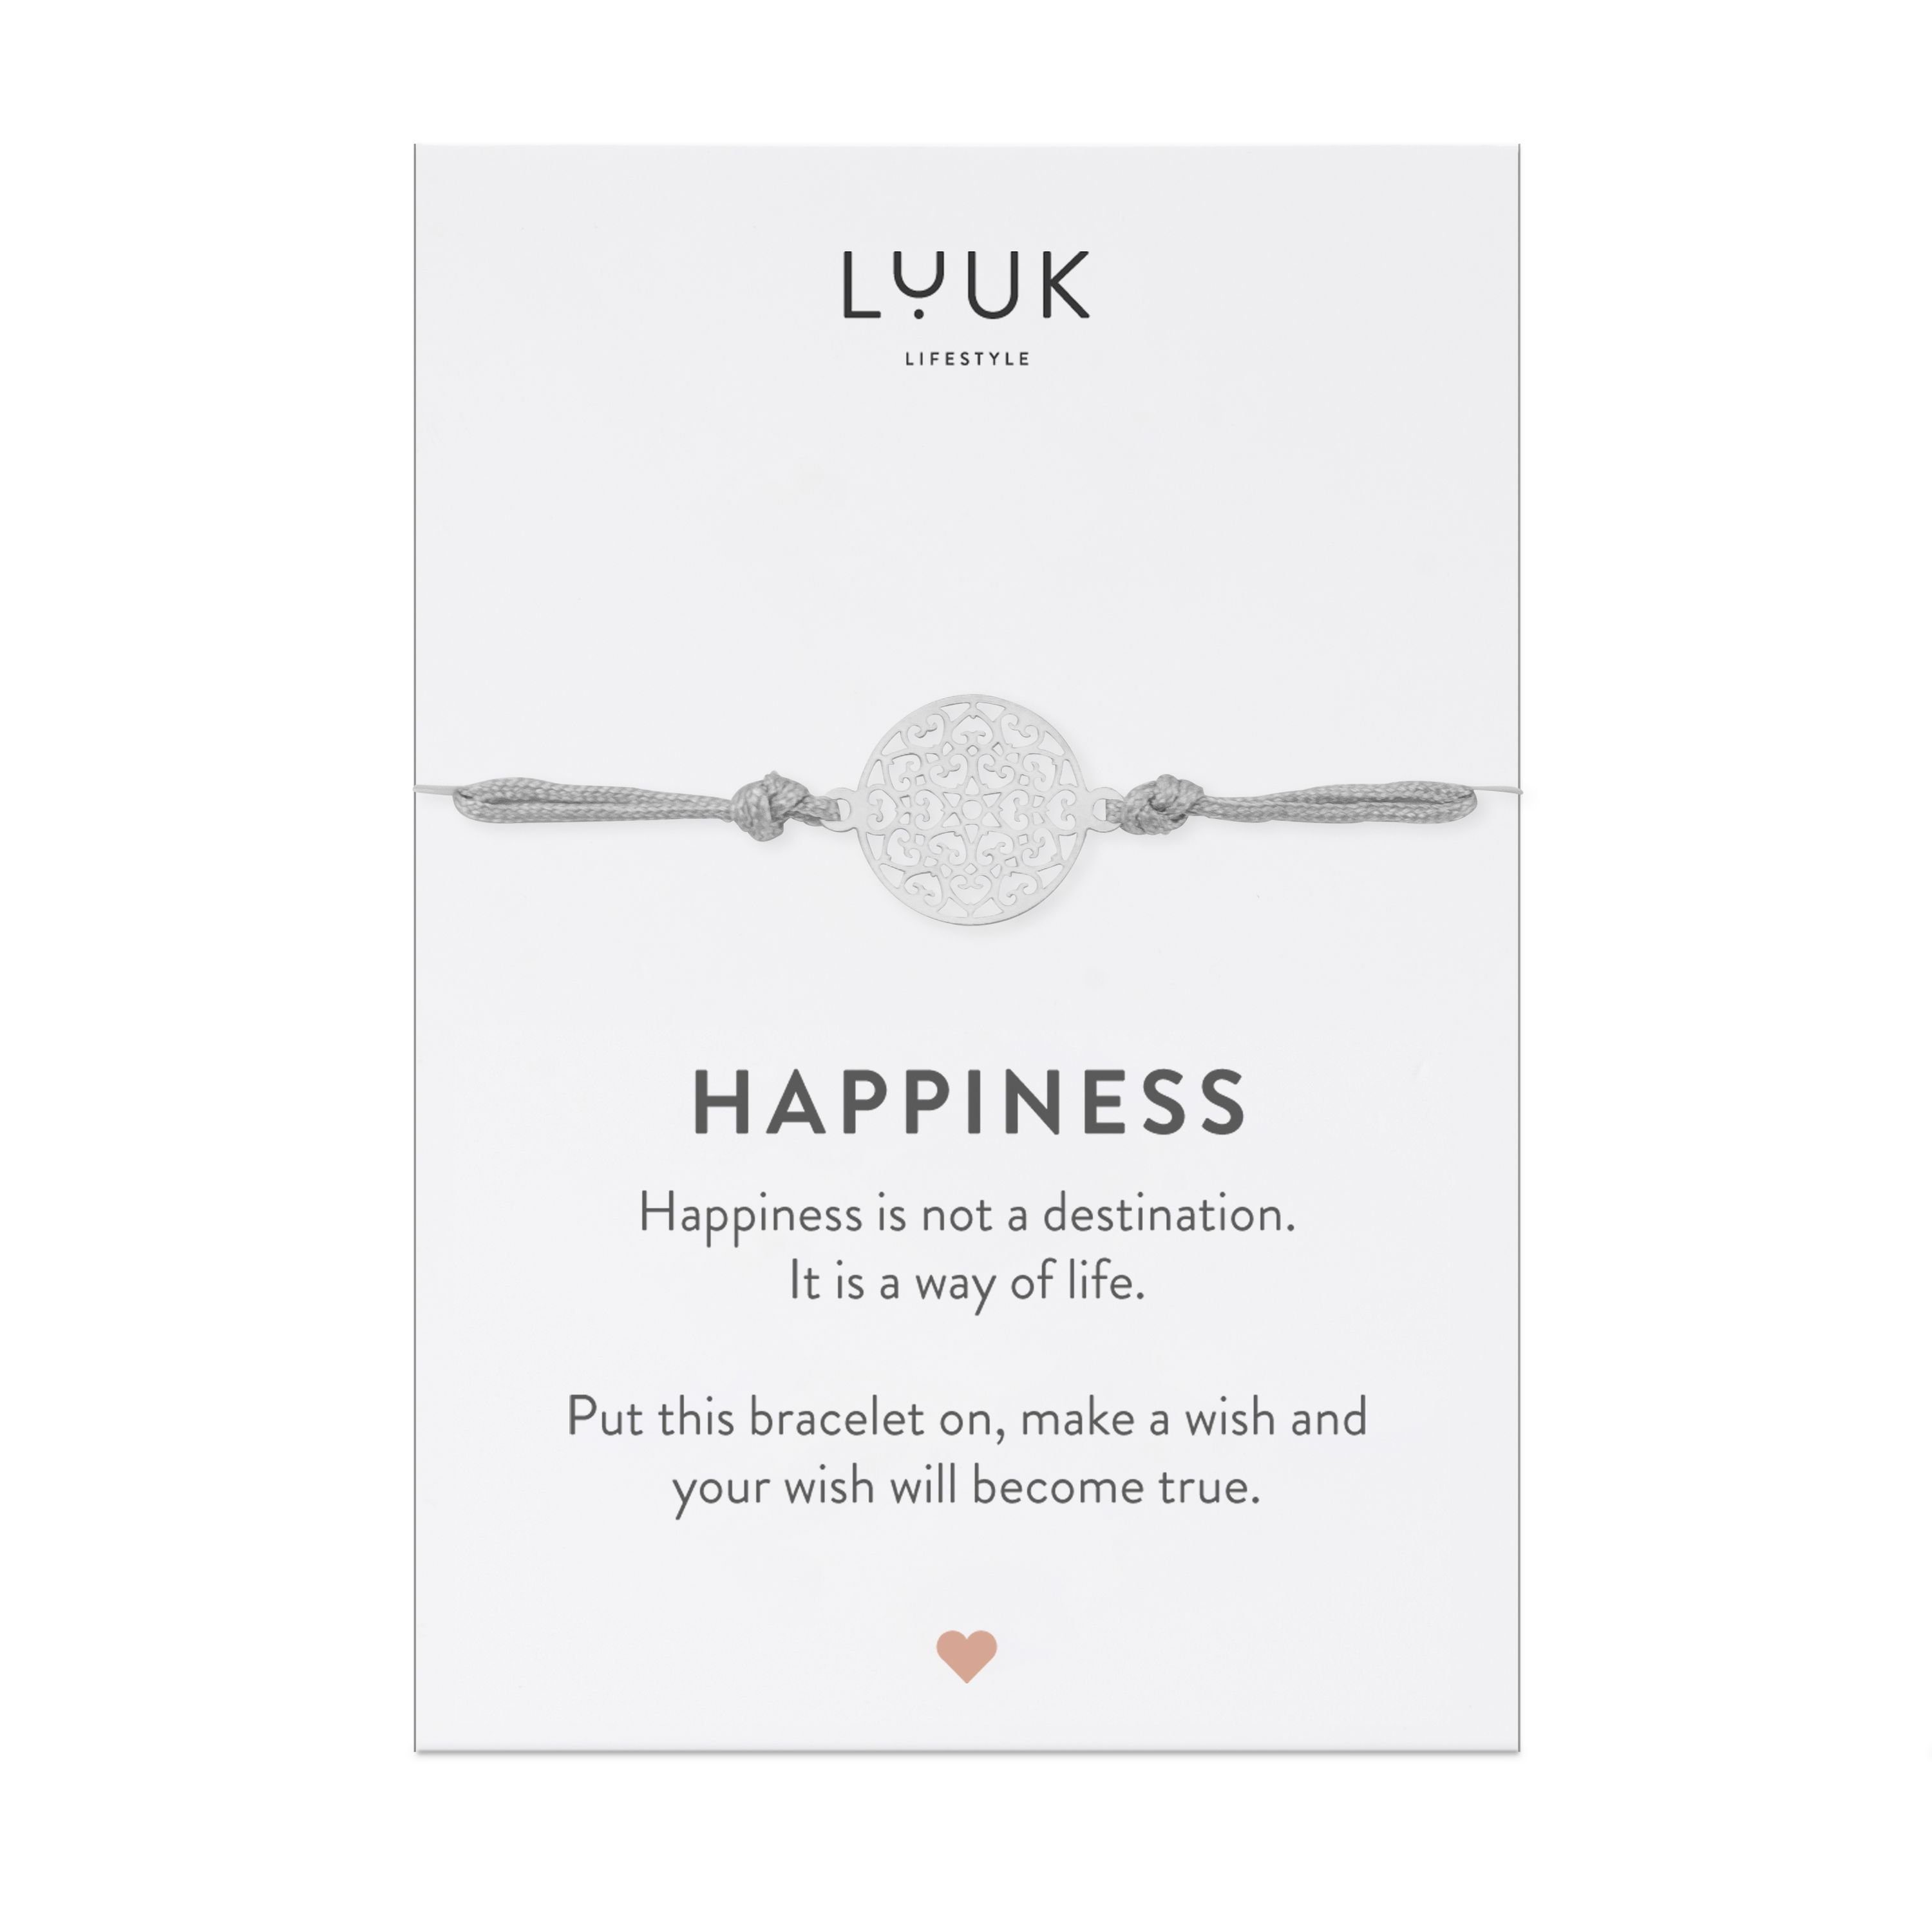 LUUK LIFESTYLE Freundschaftsarmband Lebensblume, handmade, mit Happiness Spruchkarte Silber | Armbänder